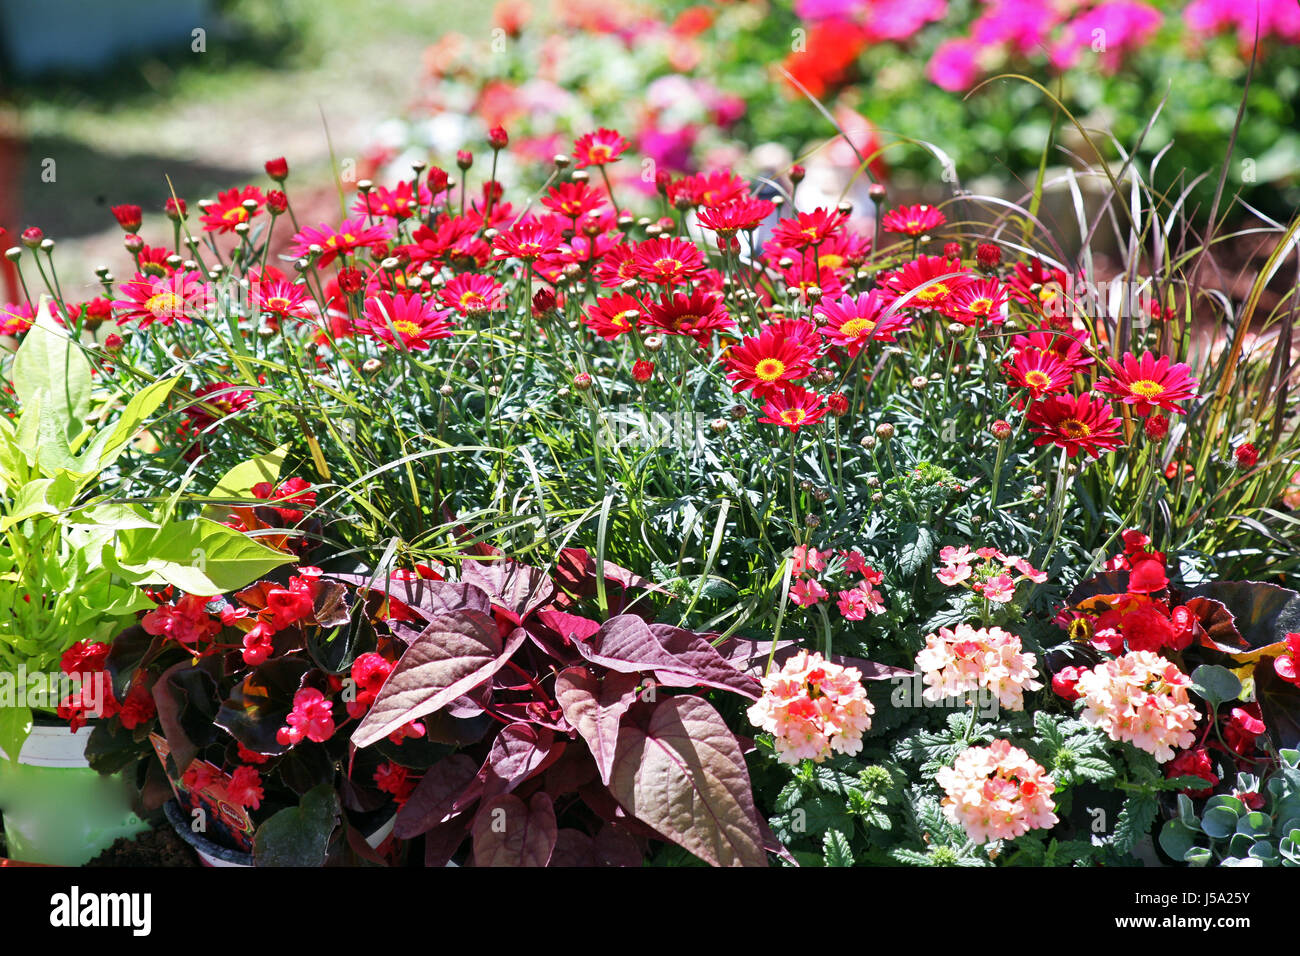 Flowers,plants,gardening and arrangements,spring to summer,Croatia,51 Stock Photo